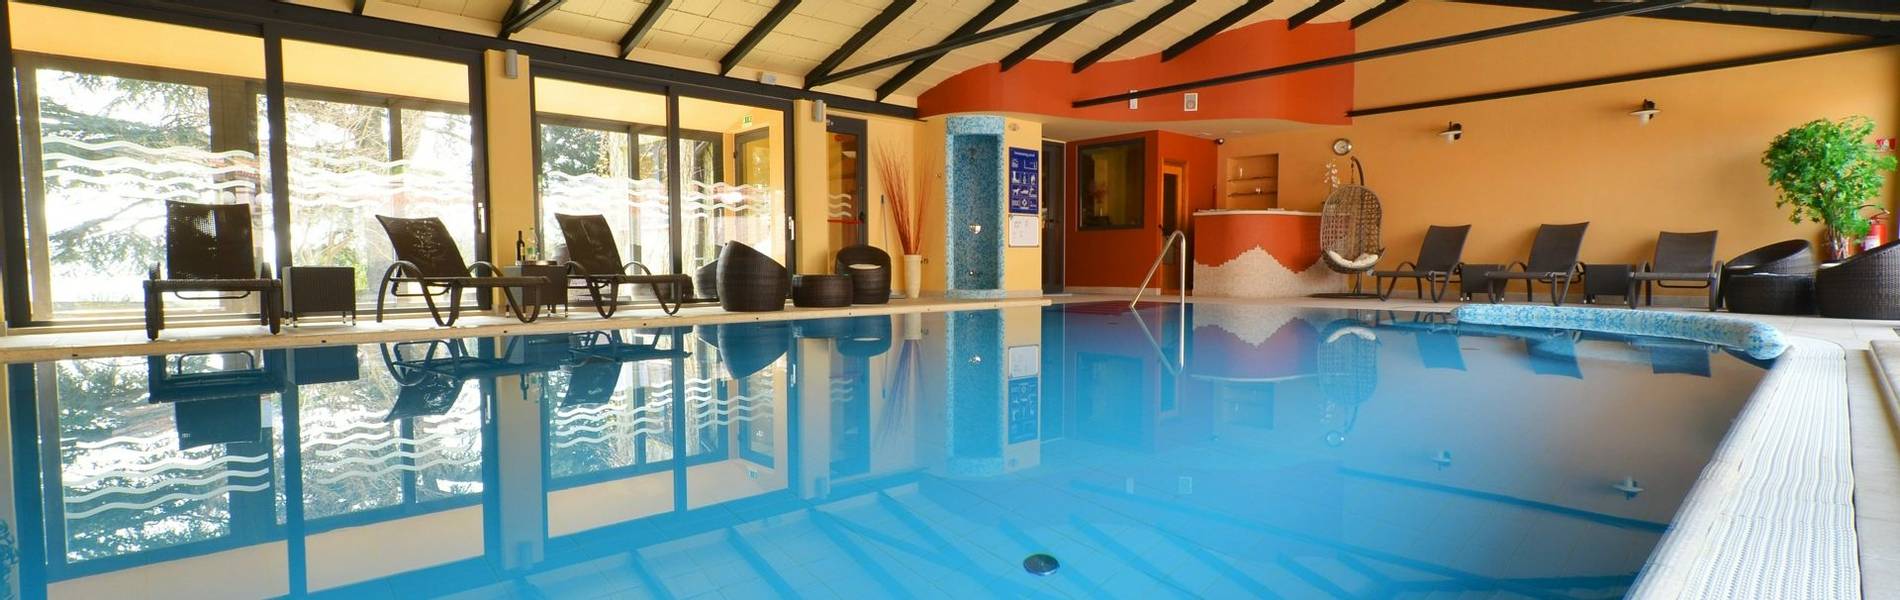 Swimming-Pool-at-Hotel-Motovun-2014.jpg